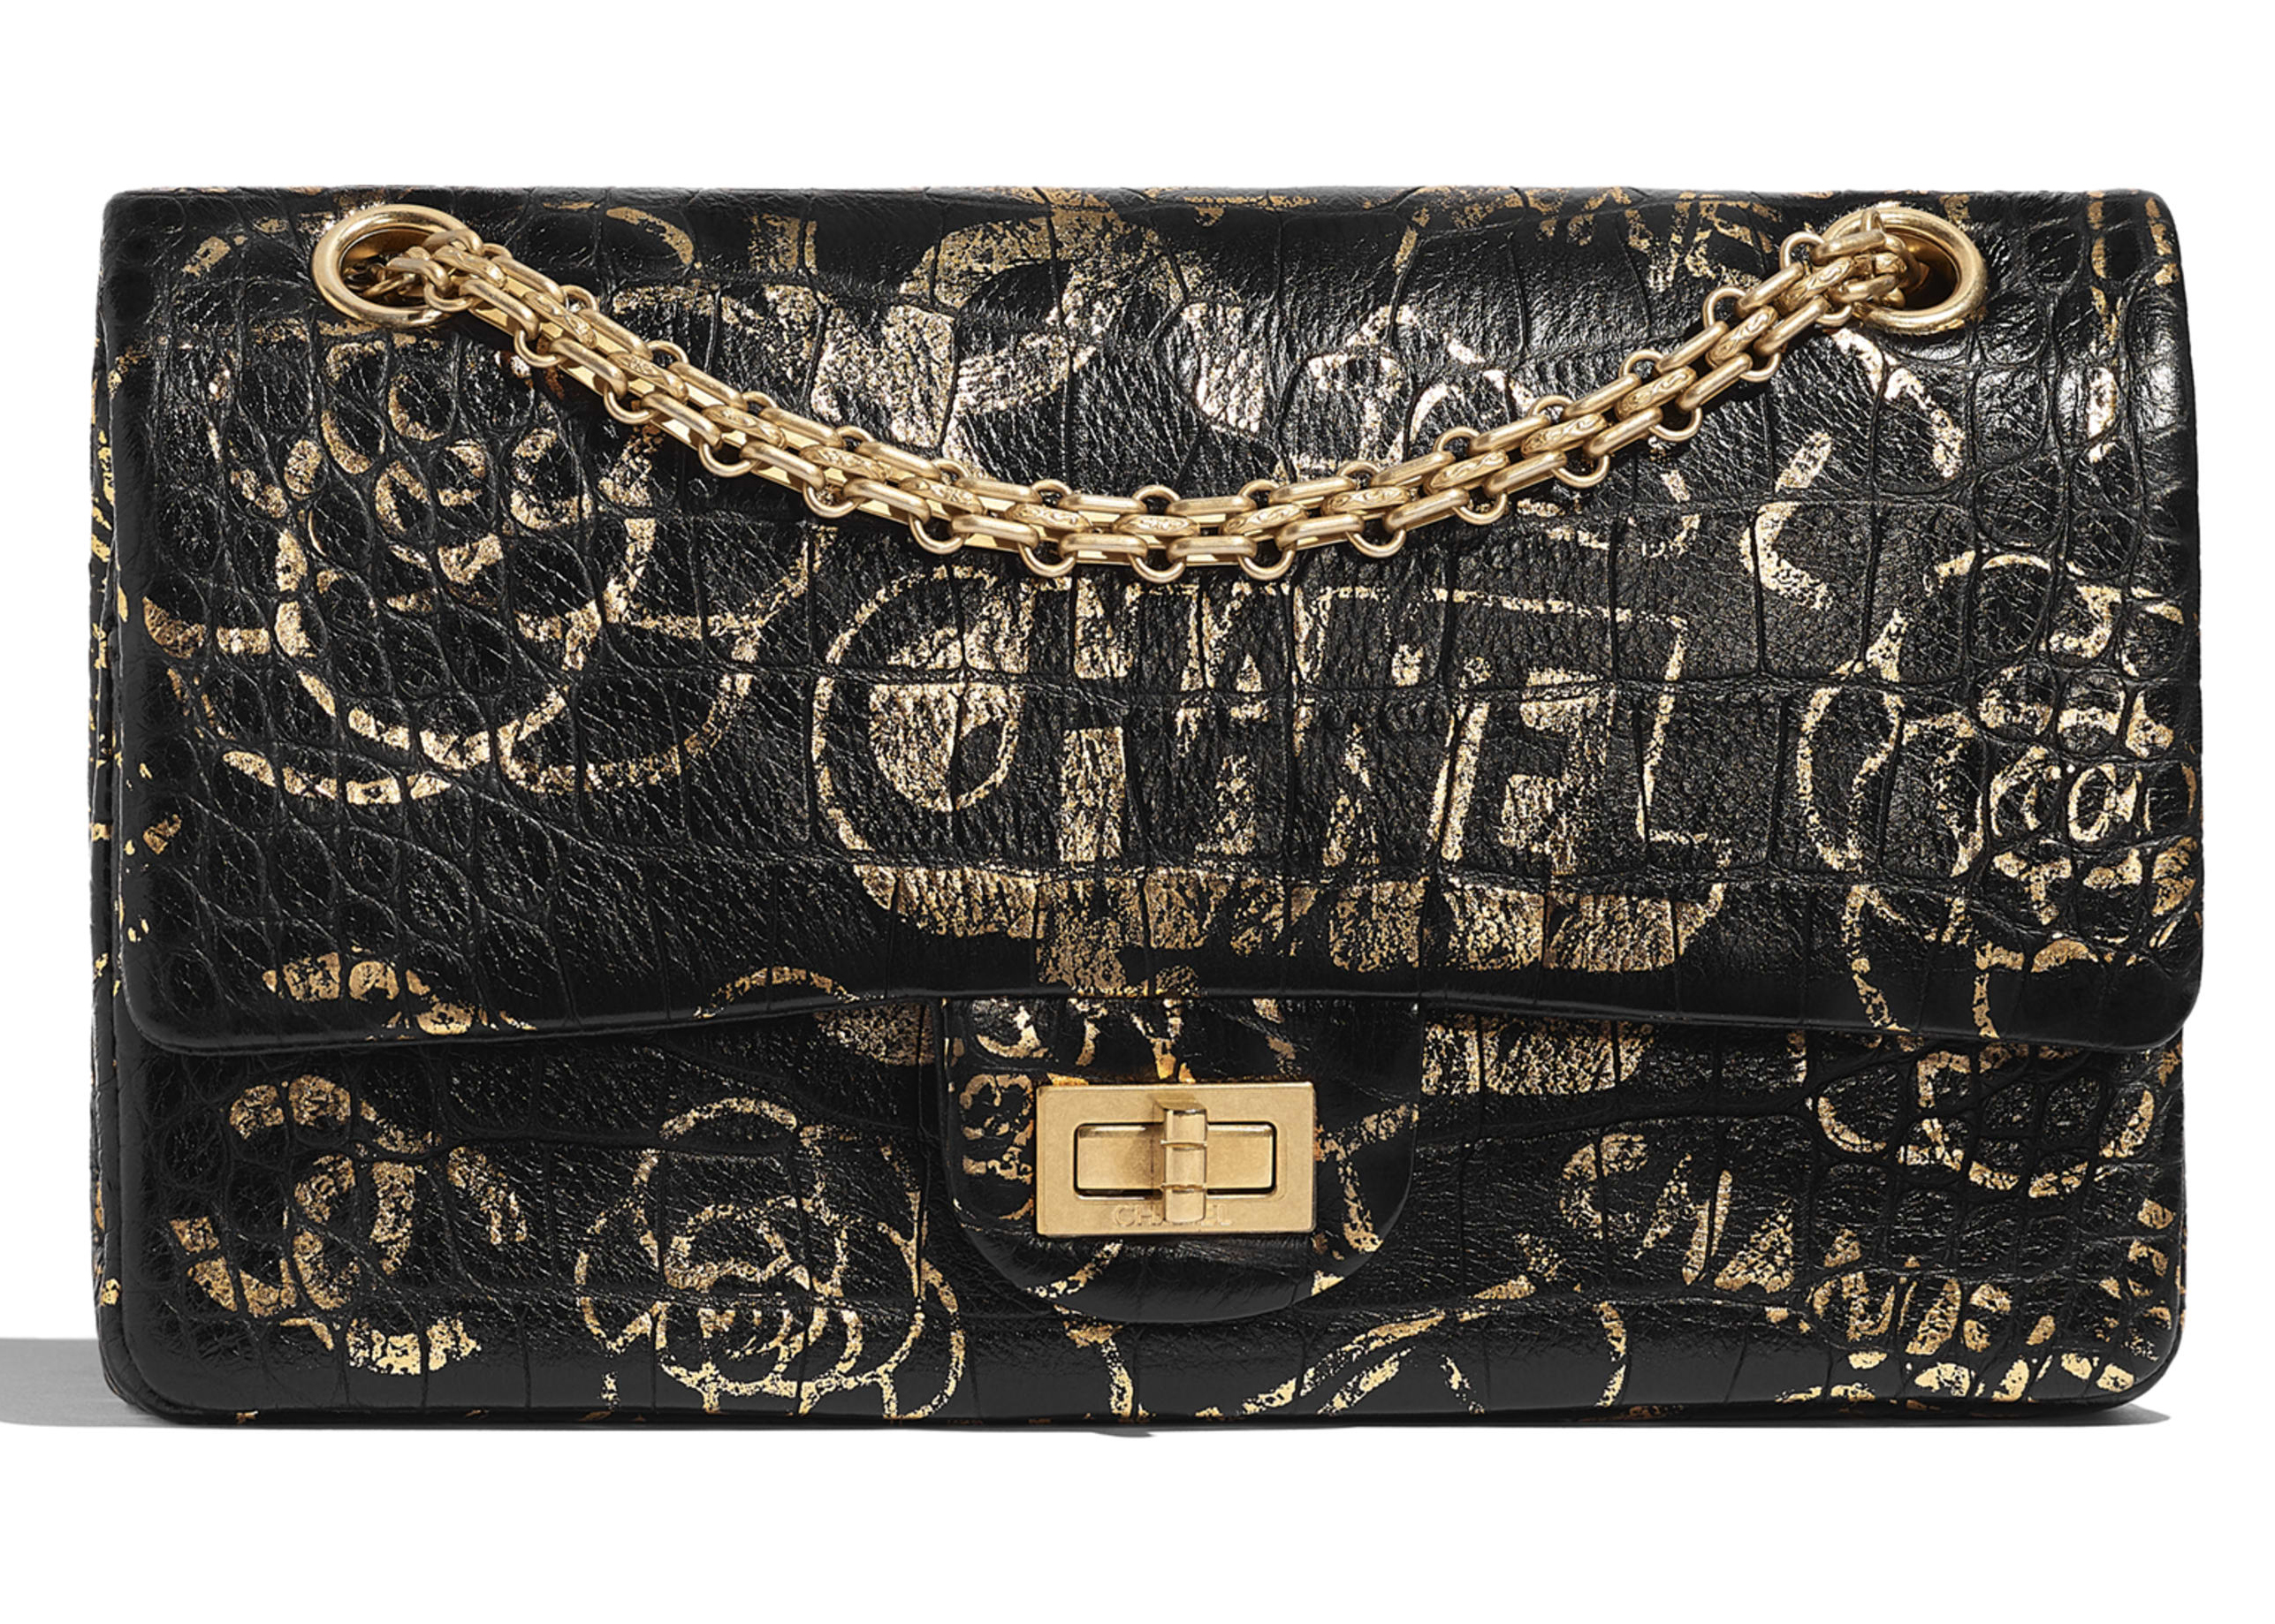 FW9-14 36w chanel 2.55 bag | The Urban Vogue | Flickr